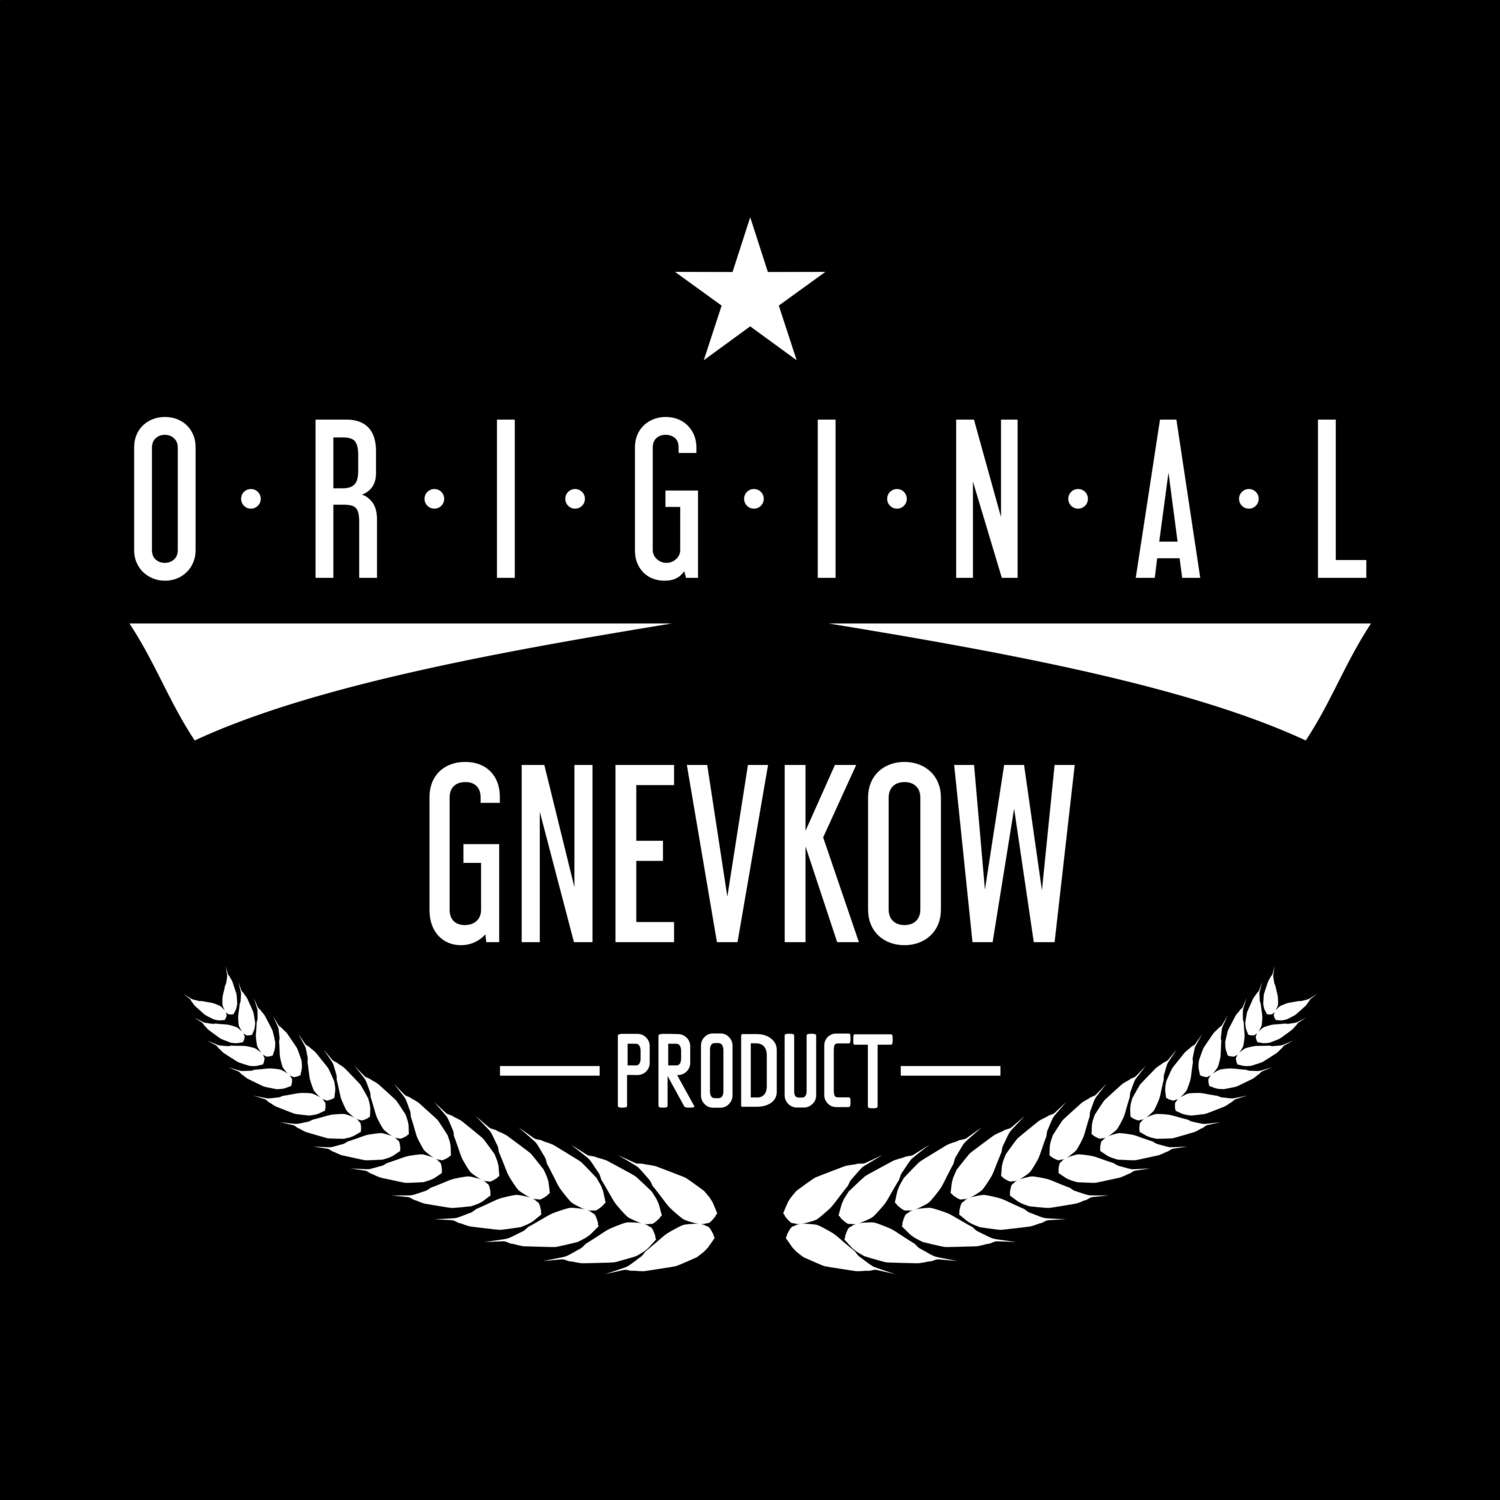 Gnevkow T-Shirt »Original Product«